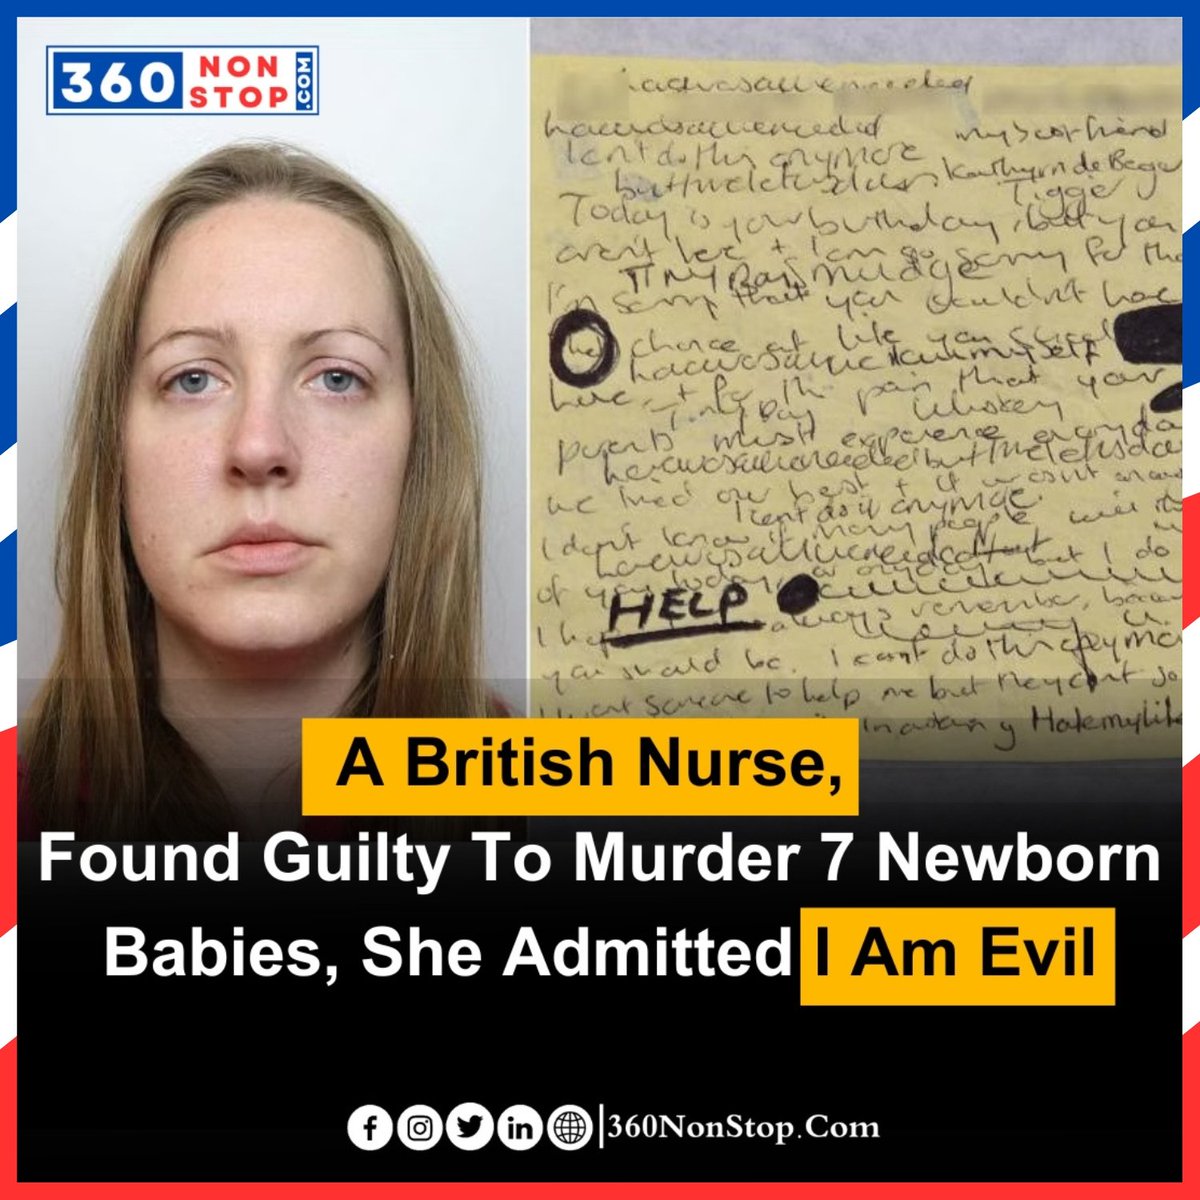 A British Nurse,  Found Guilty To Murder 7 Newborn Babies, She Admitted I Am Evil.
#BritishNurse #MurderCase #NewbornBabies #GuiltyVerdict #CrimeNews #JusticeServed #TragicIncident #LegalJustice #EvilActs #Heartbreaking #360Nonstop